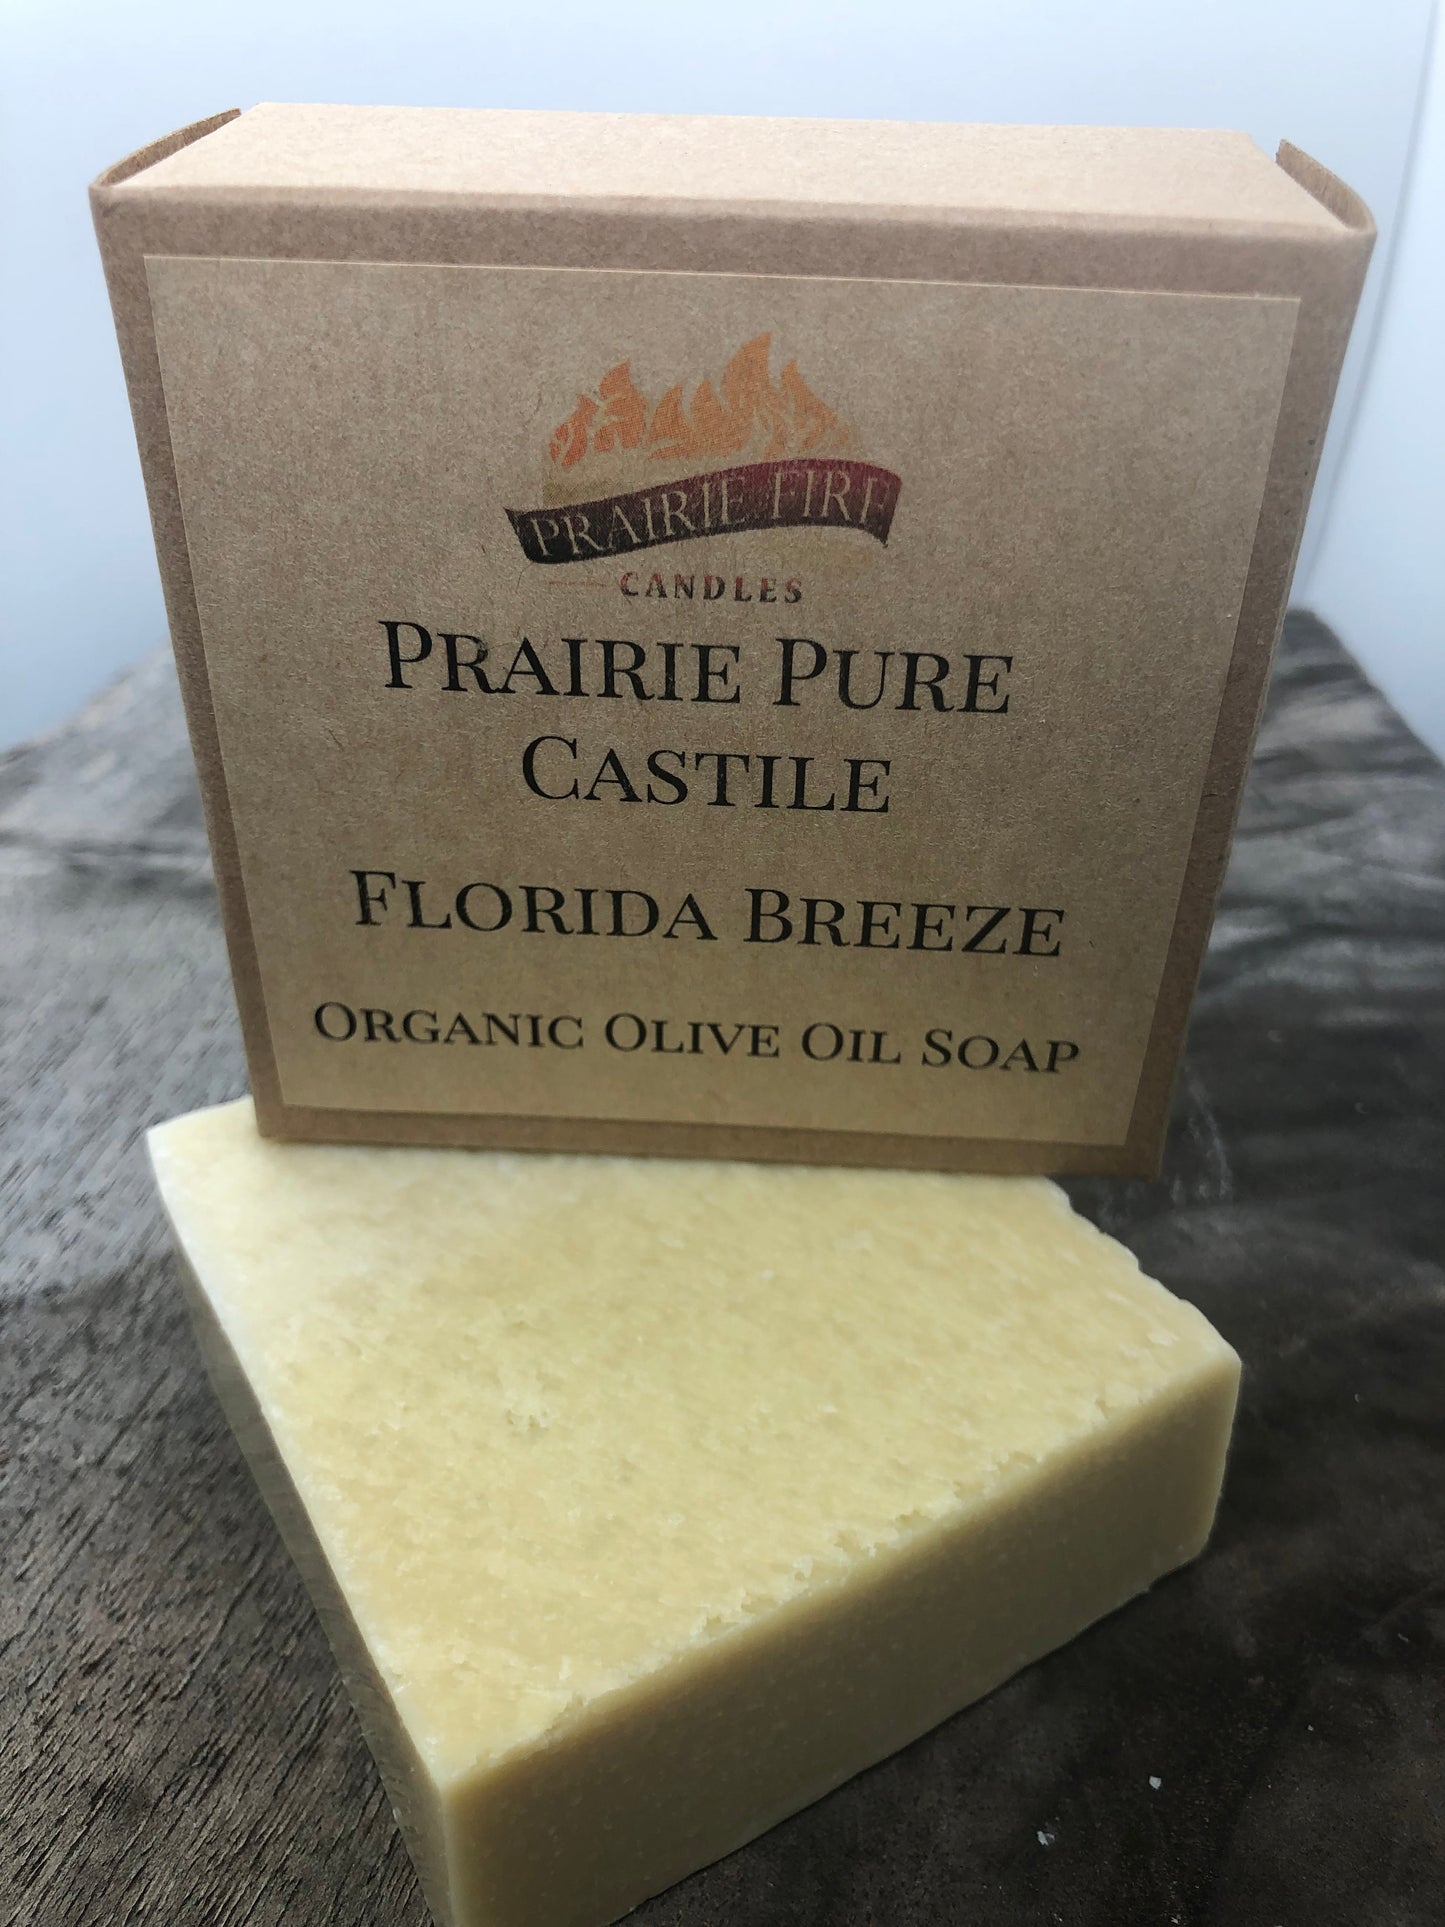 Florida Breeze Real Castile Organic Olive Oil Soap for Sensitive Skin - Dye Free - 100% Certified Organic Extra Virgin Olive Oil